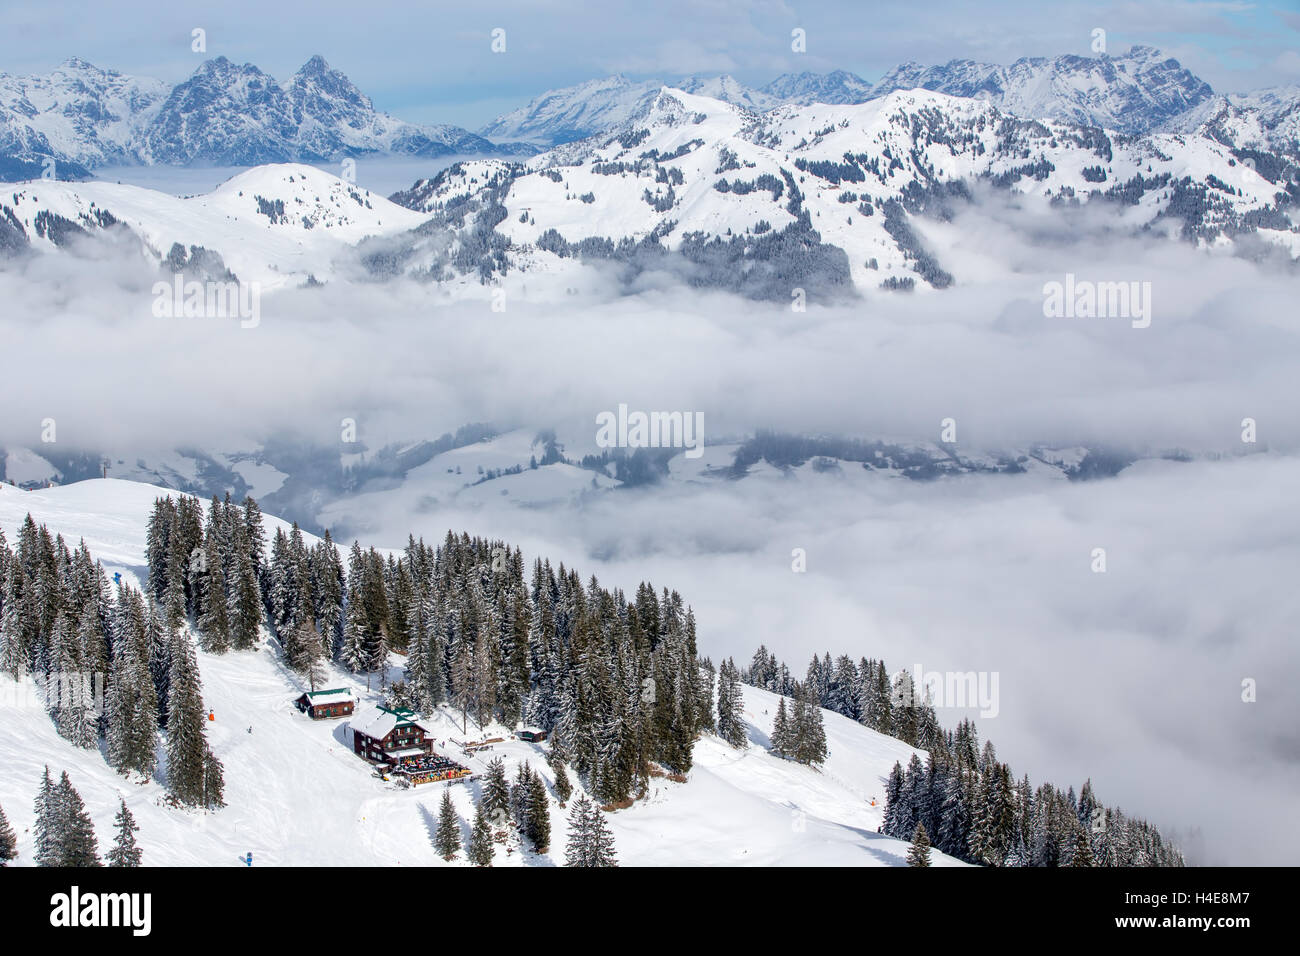 Tyrolian Alps covered by fresh snow in fog seen from the Kitzbuehel ski resort, Austria Stock Photo